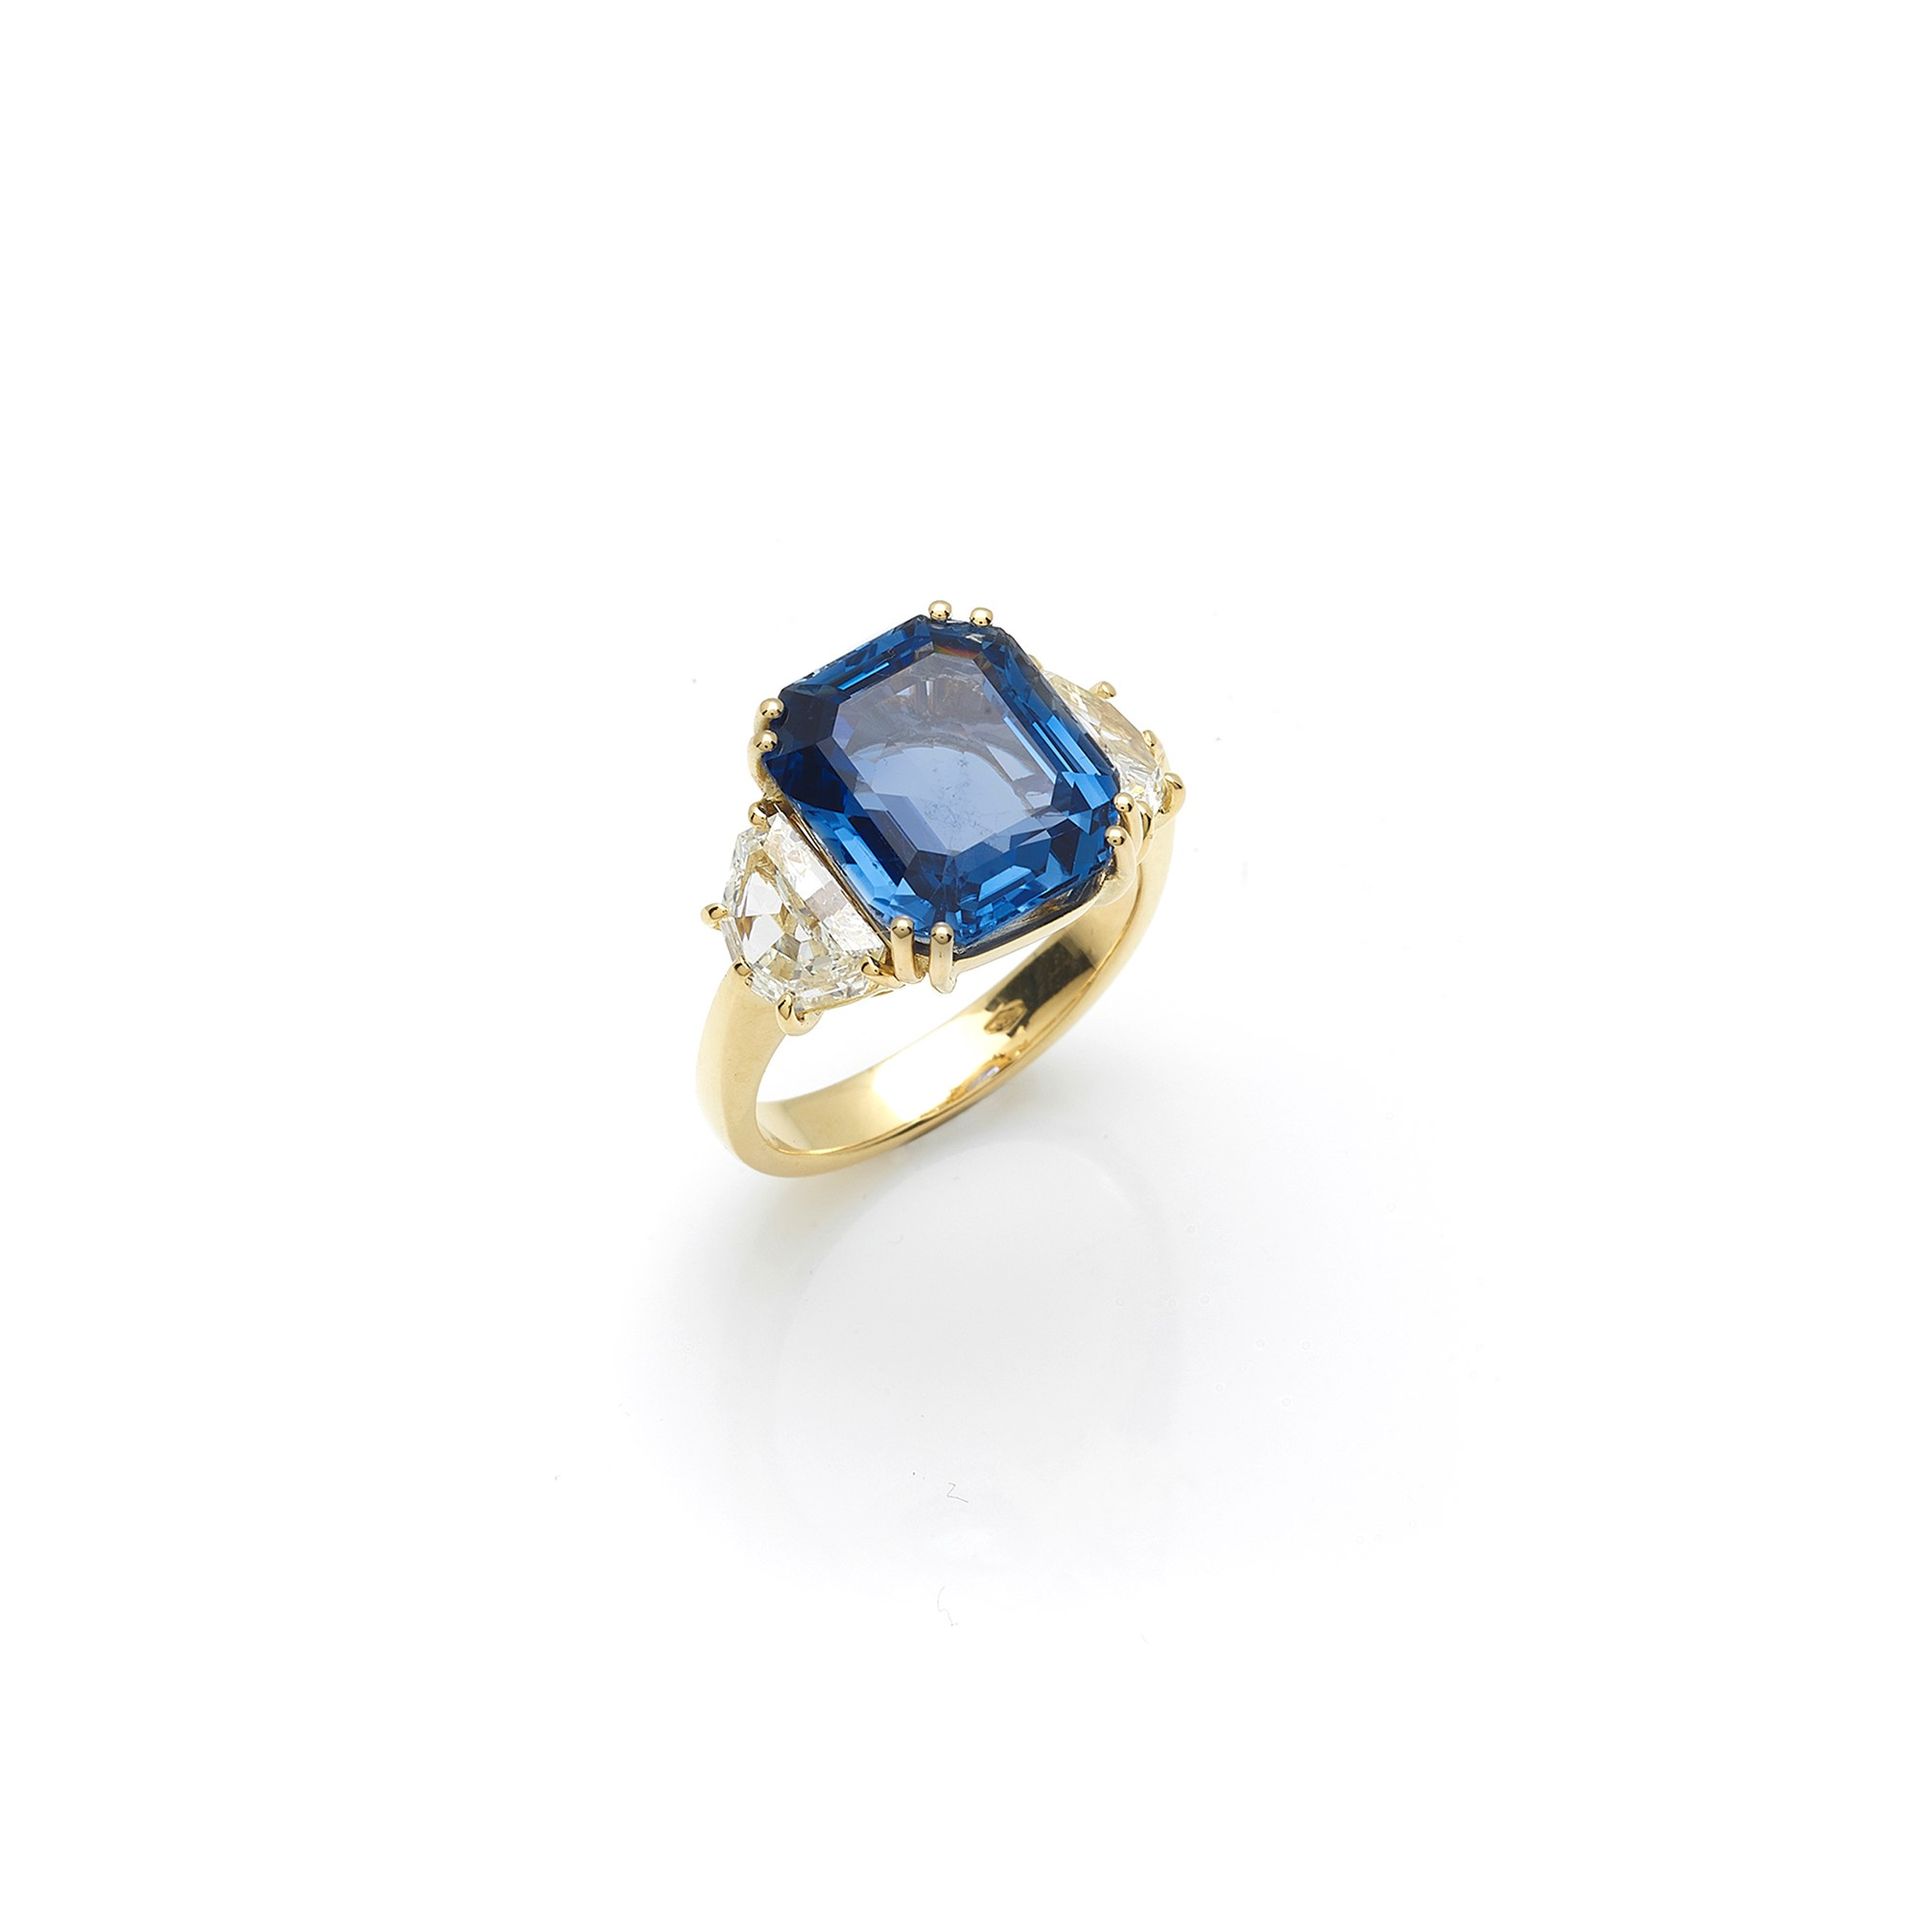 Null 18K黄金戒指，两边是8.45克拉的八角形蓝宝石，两颗约1.48克拉的花式切割钻石。 

尺寸15/54

重量8.05克 

CISGEM证书


&hellip;